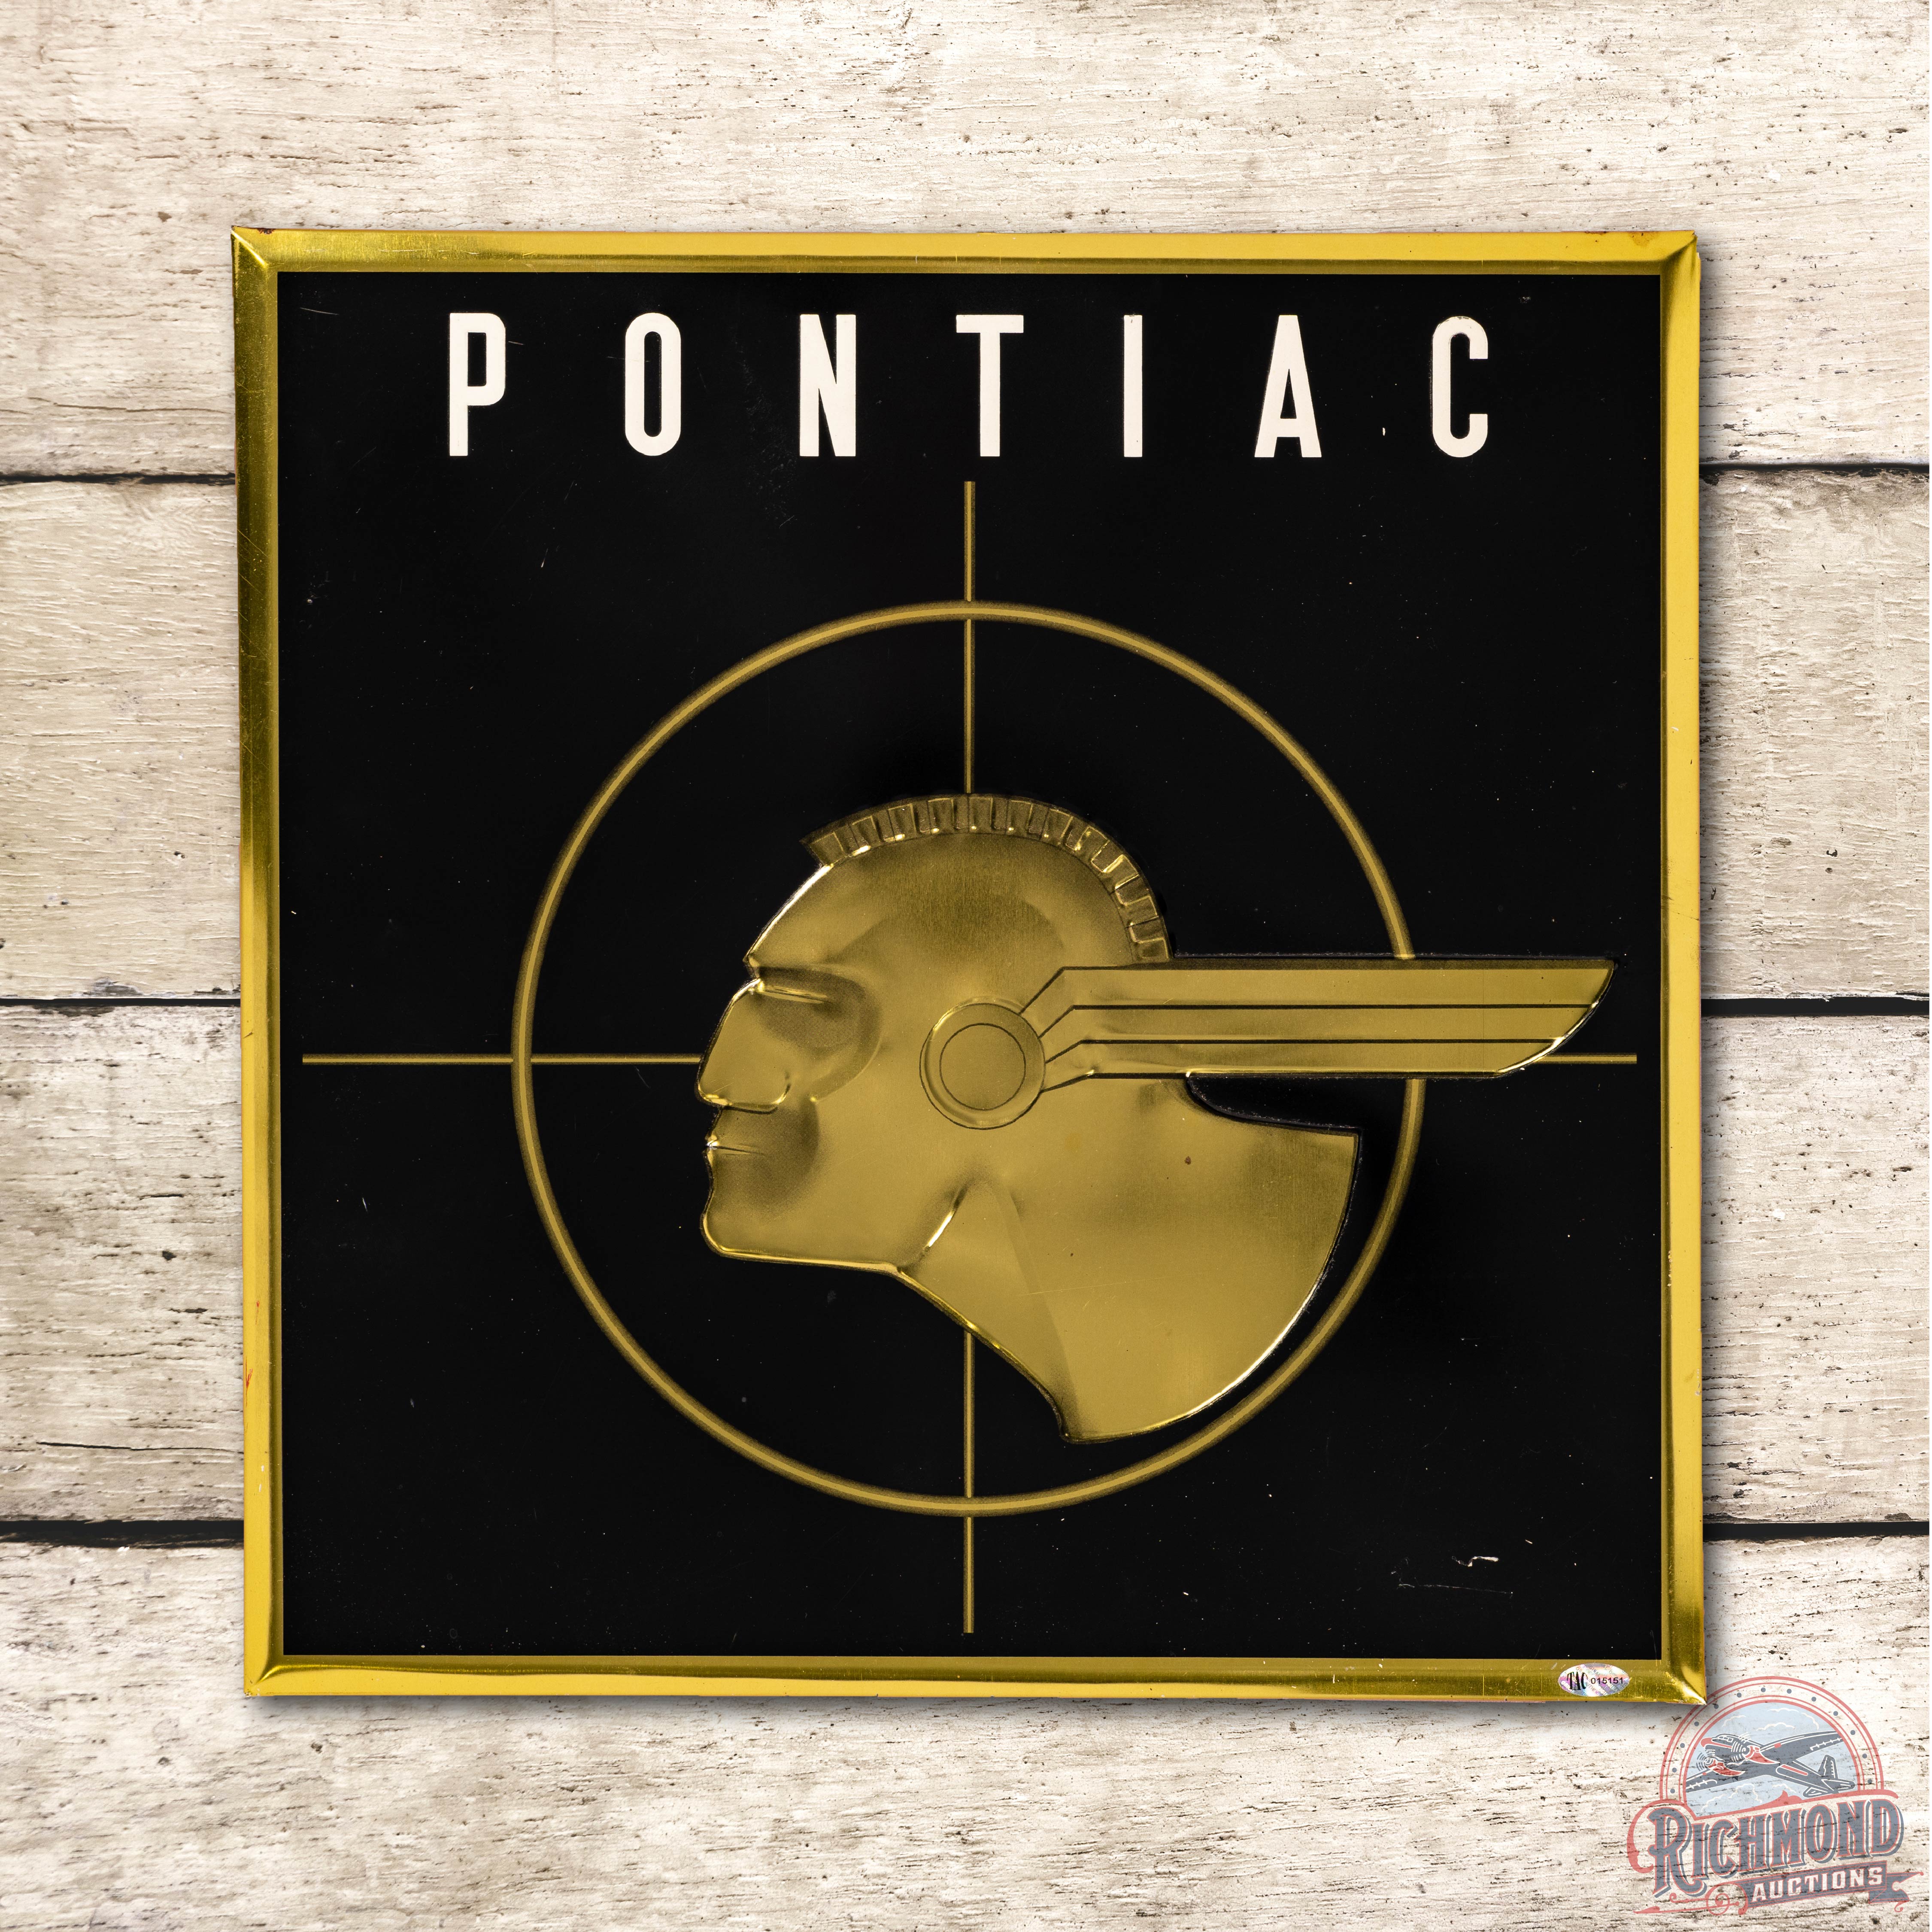 pontiac indian head logo